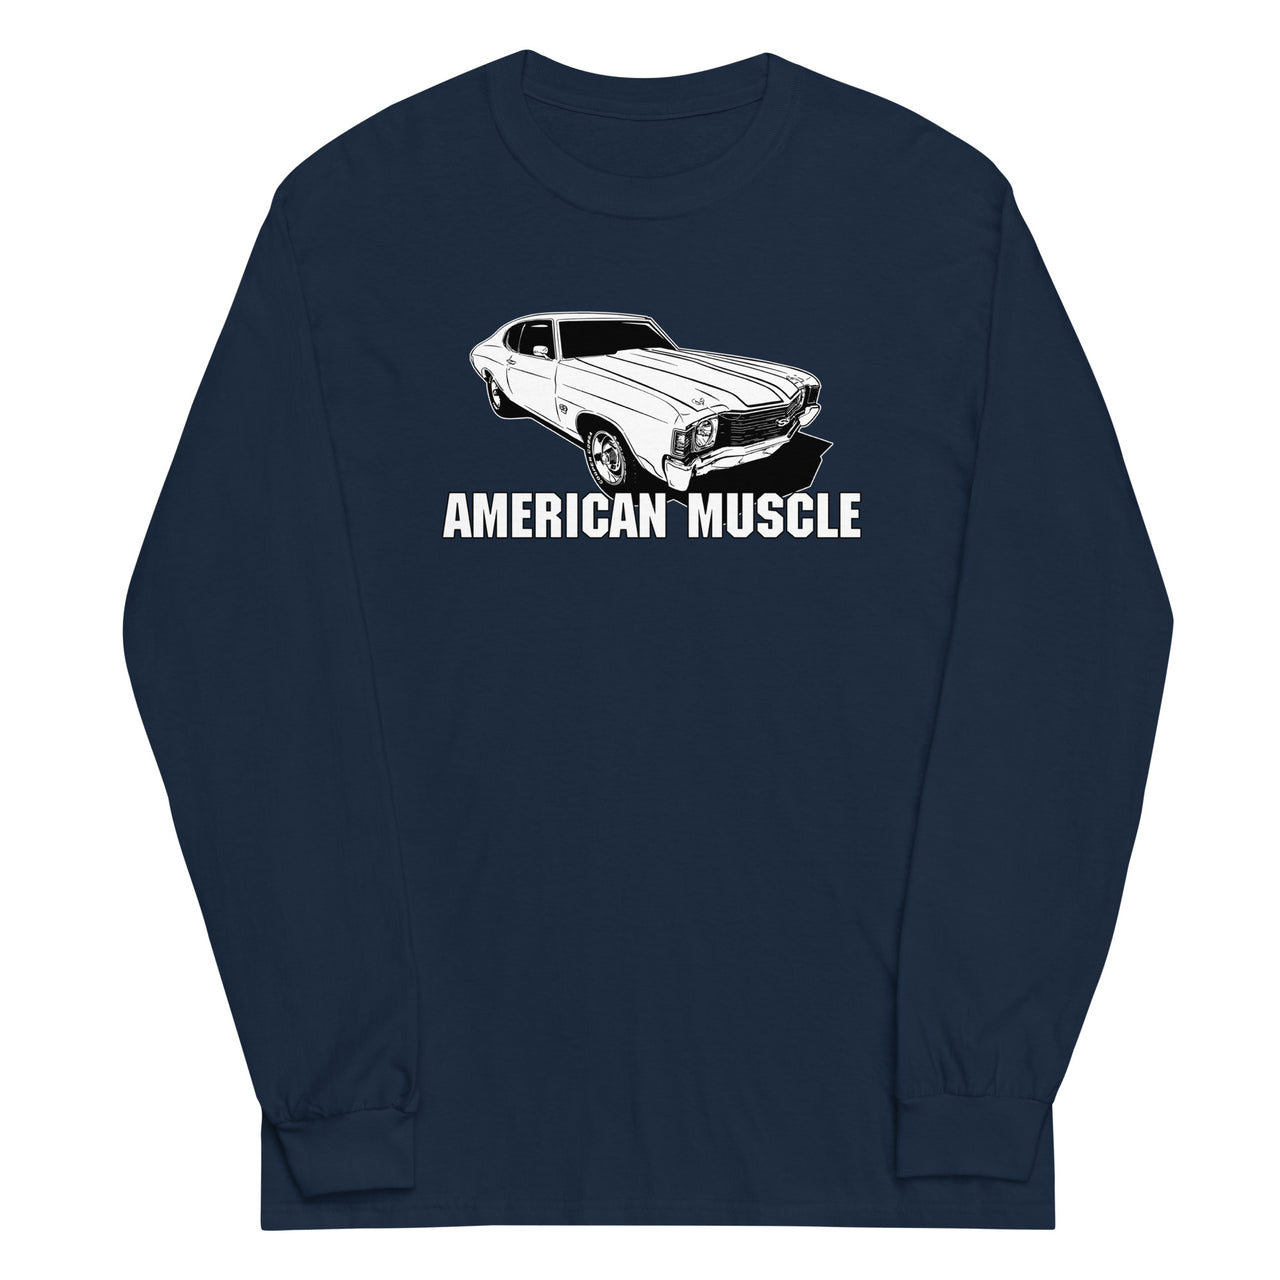 1972 Chevelle Car Long Sleeve Shirt American Muscle Car Tee navy